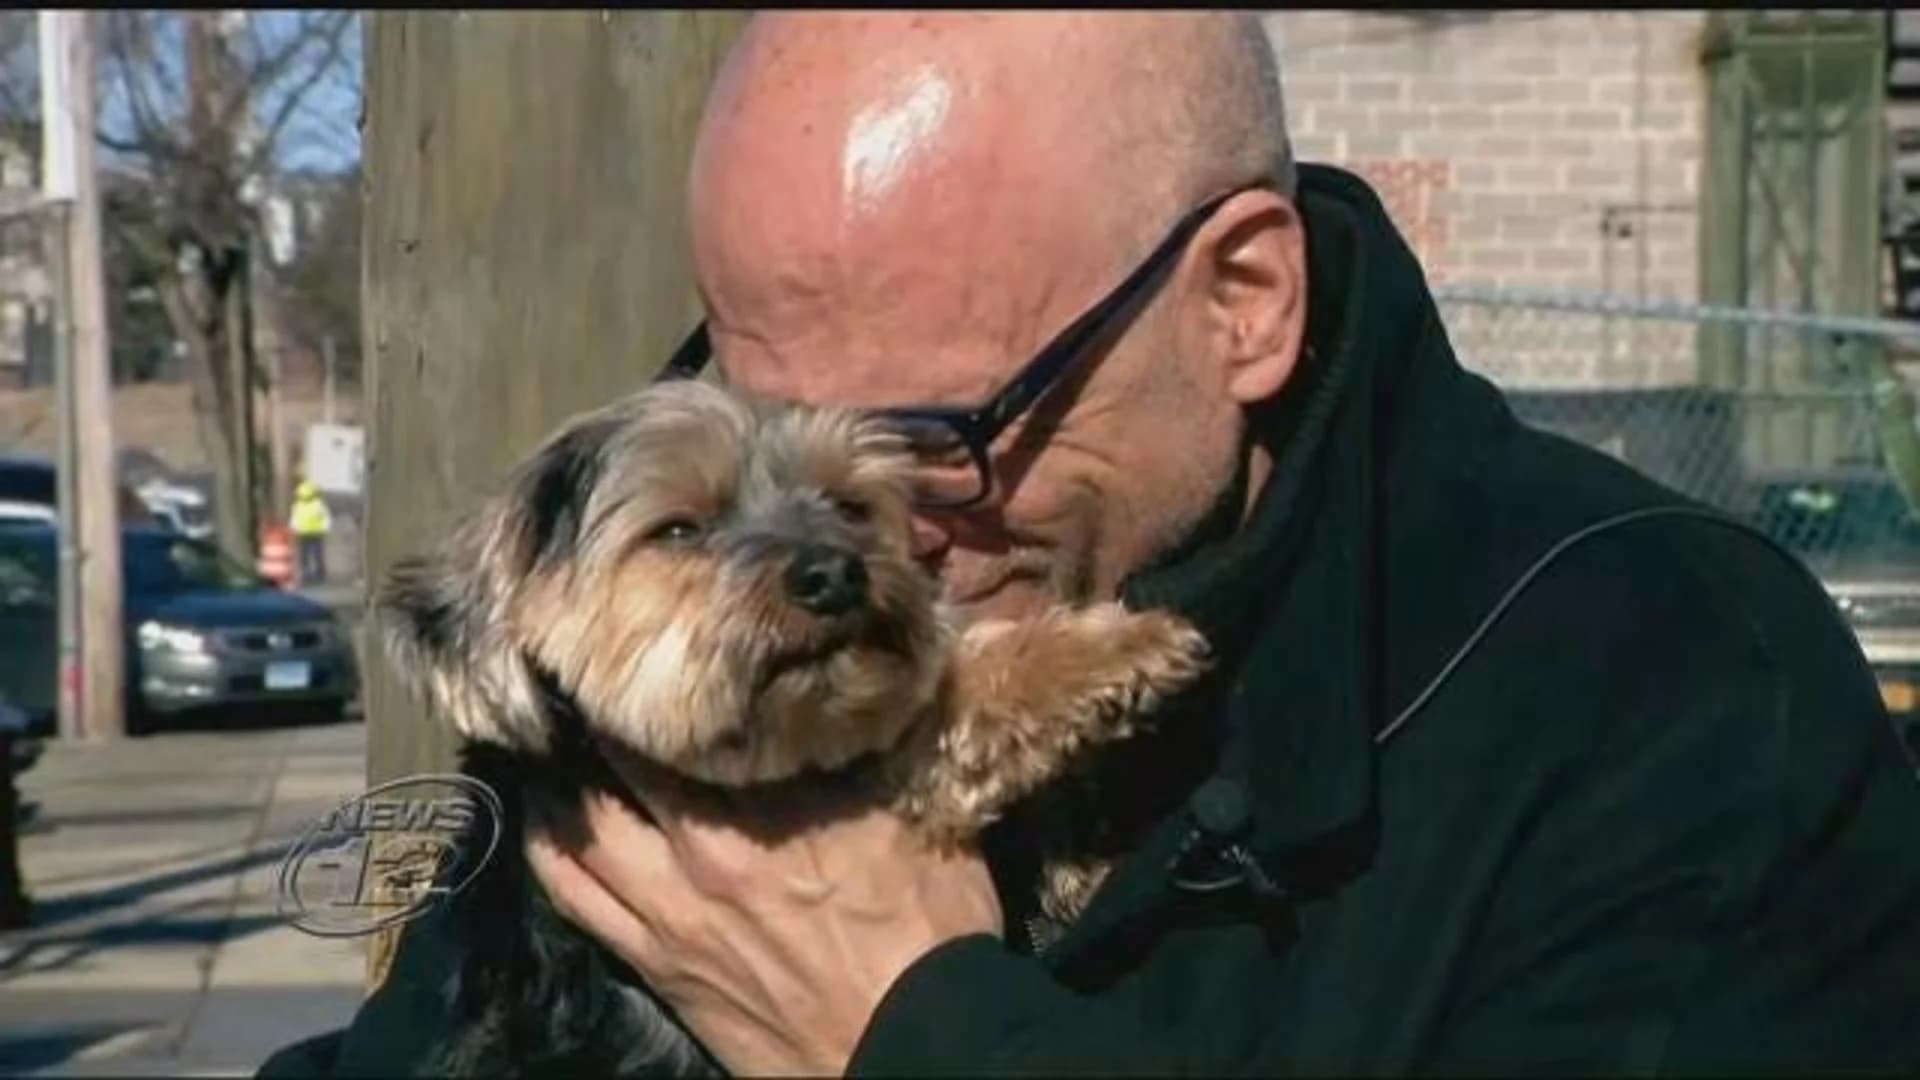 Reunited: Stolen dog returns home